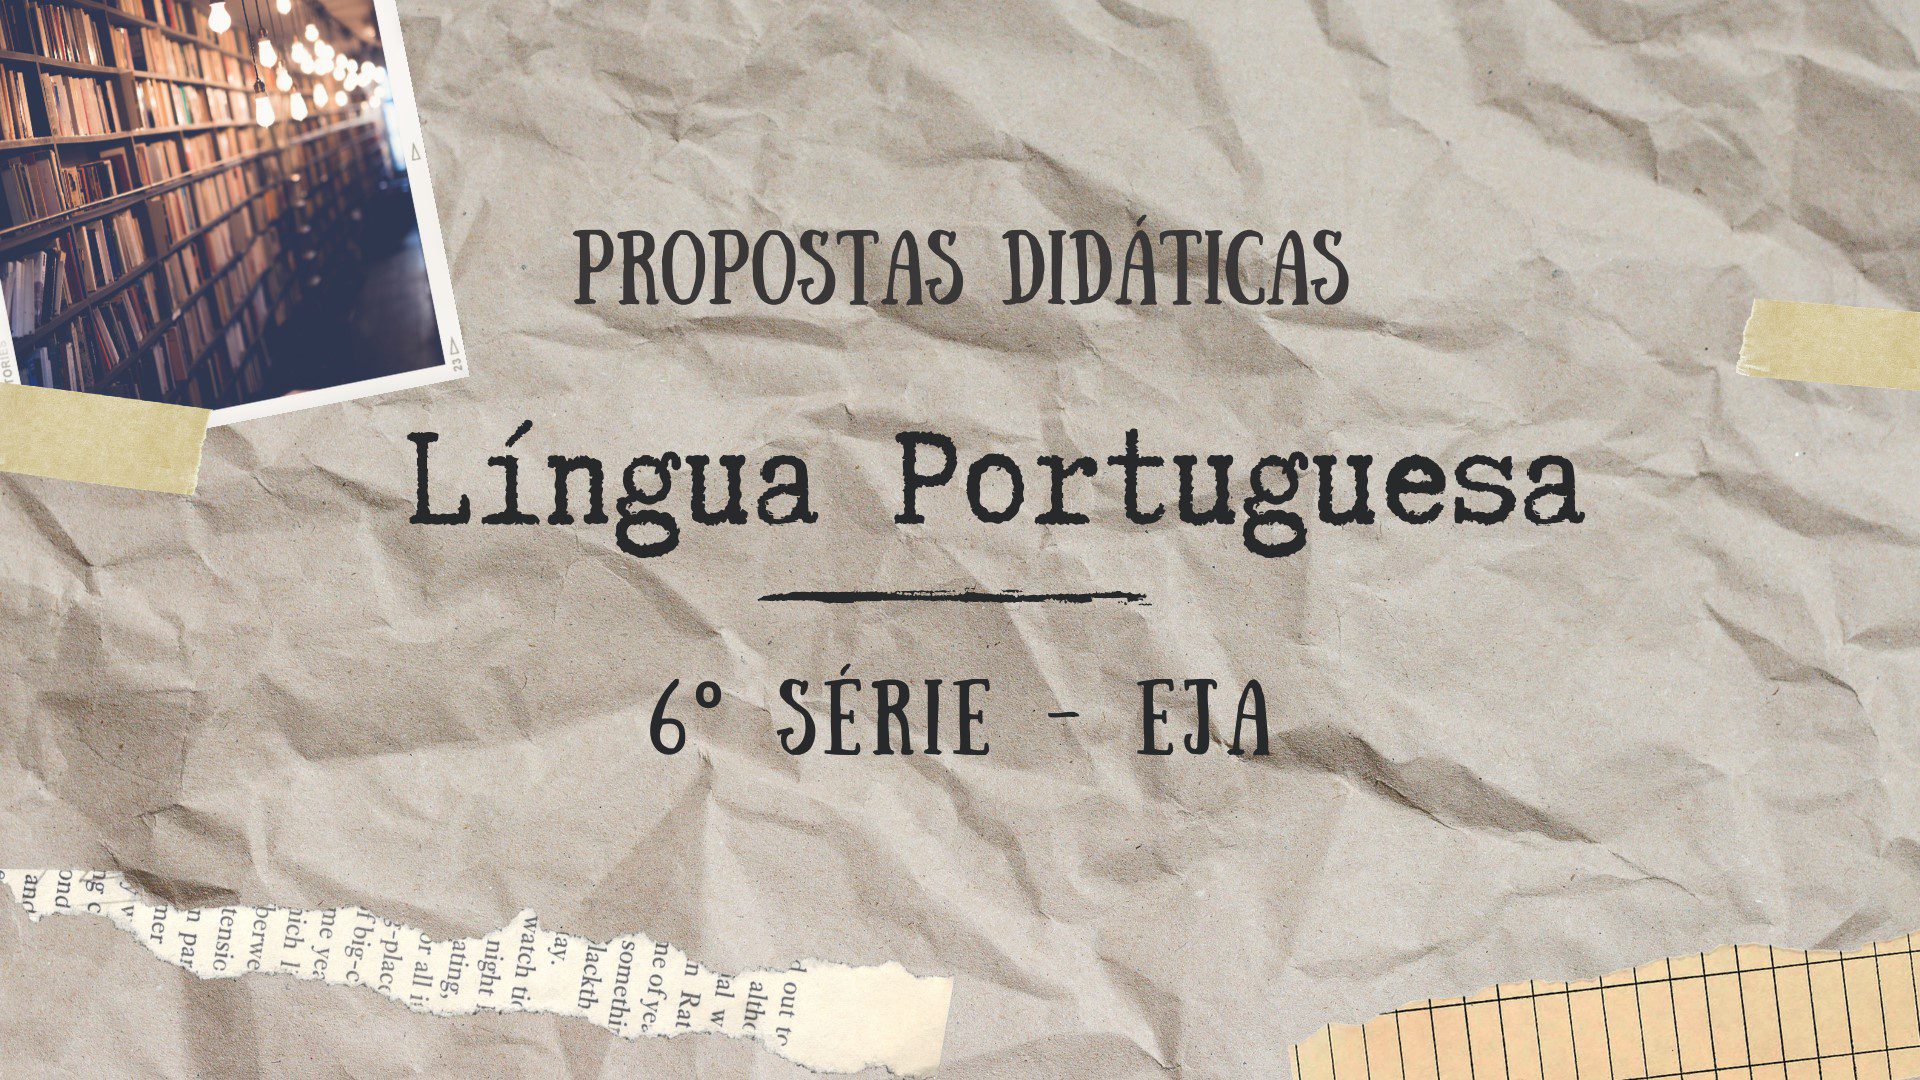 You are currently viewing Propostas didáticas – Língua Portuguesa EJA – 6ª série.